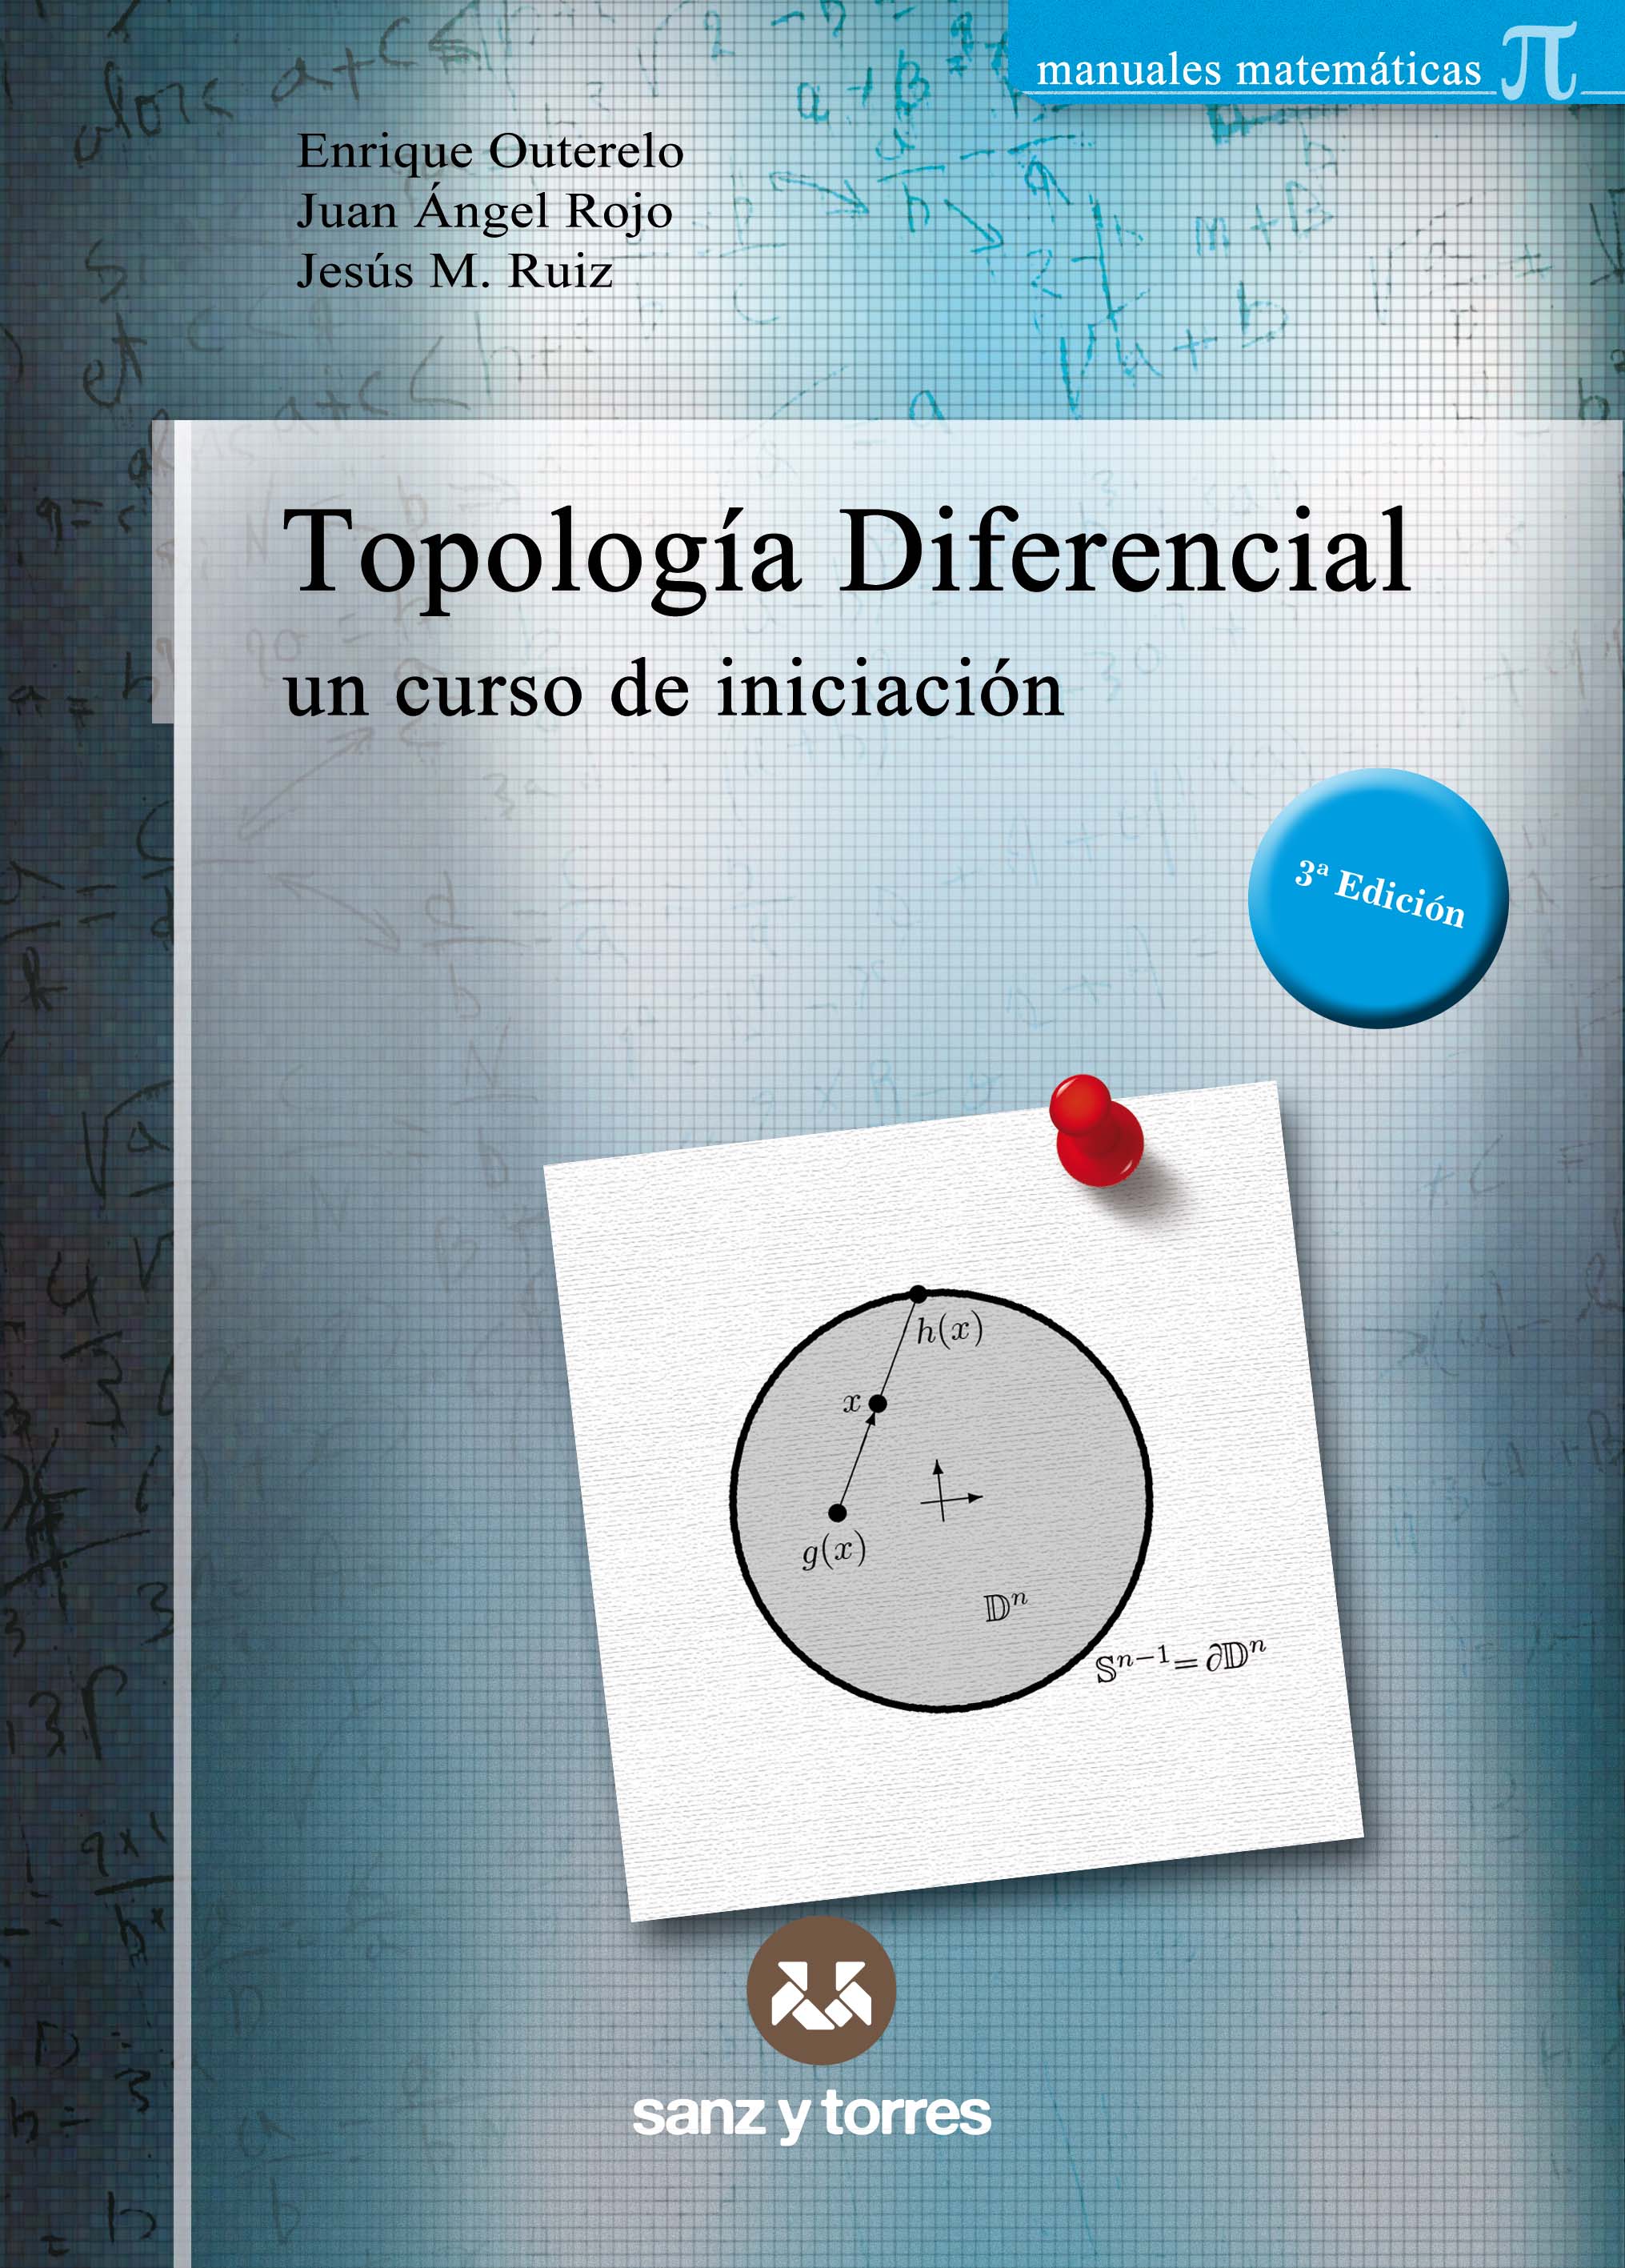 Topología diferencial (3ª Edición)
Un curso de iniciación